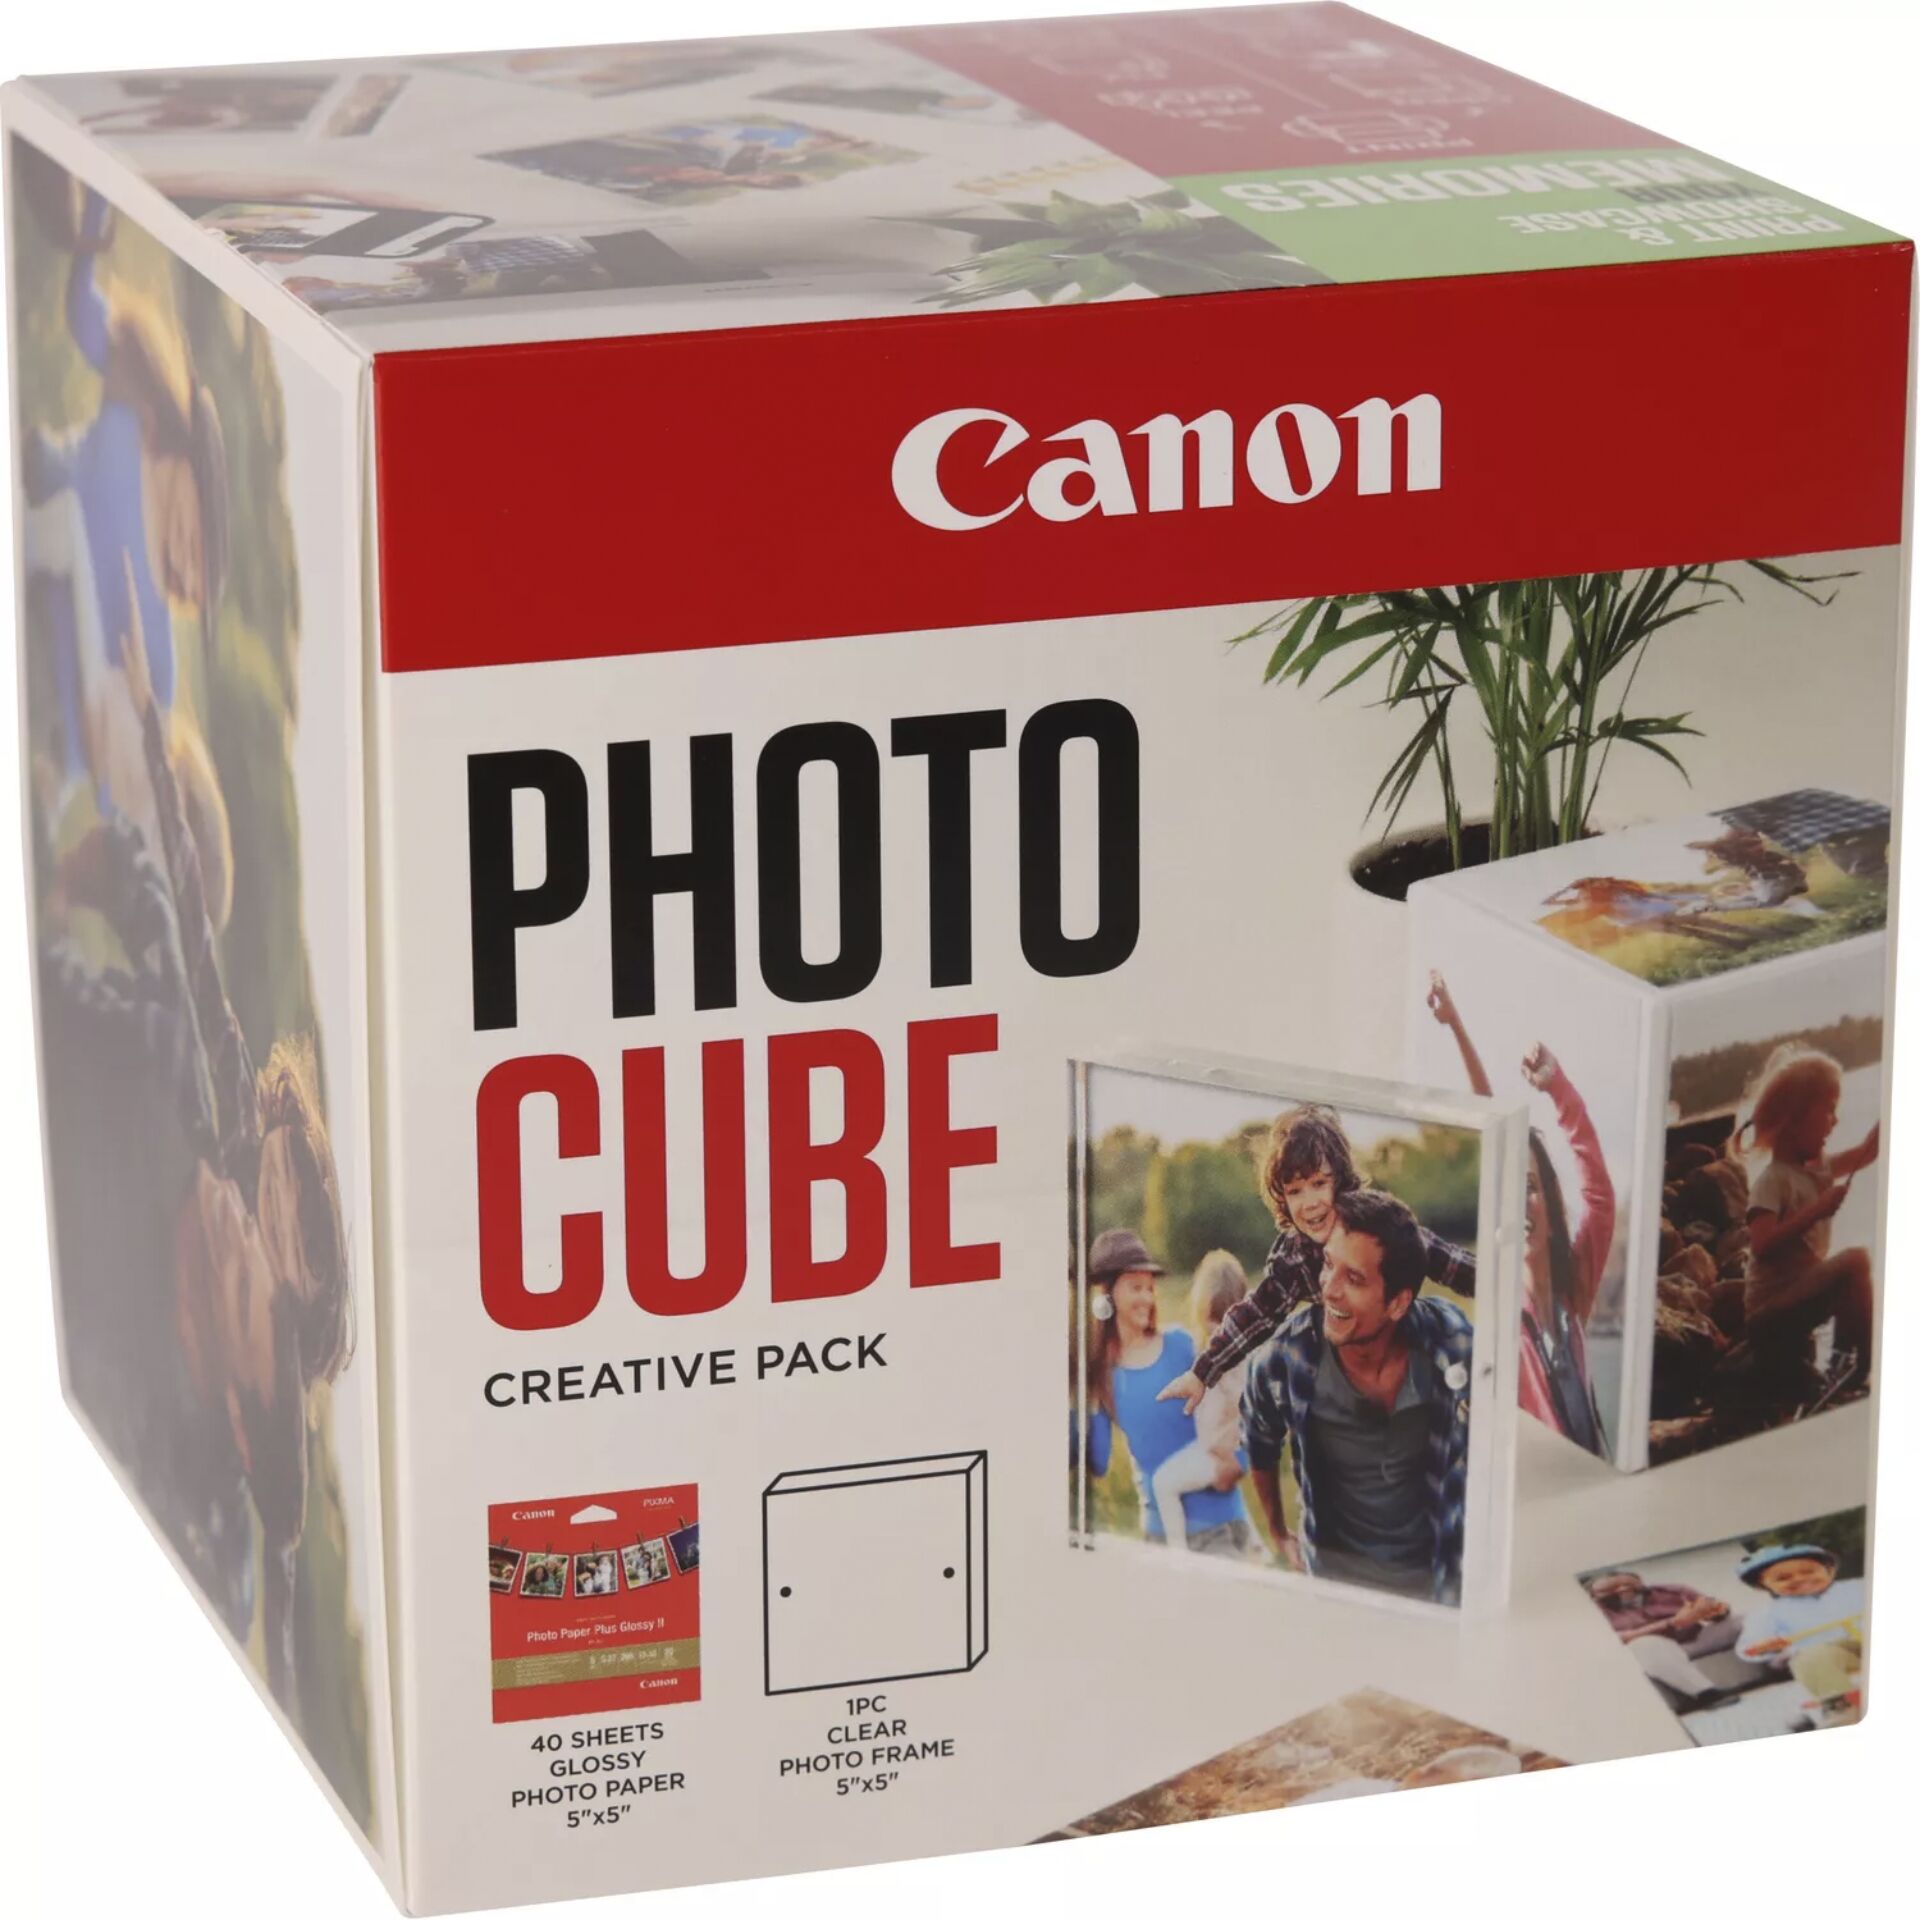 Canon PP-201 13x13 cm Photo Cube pacch.creativo bian. verde